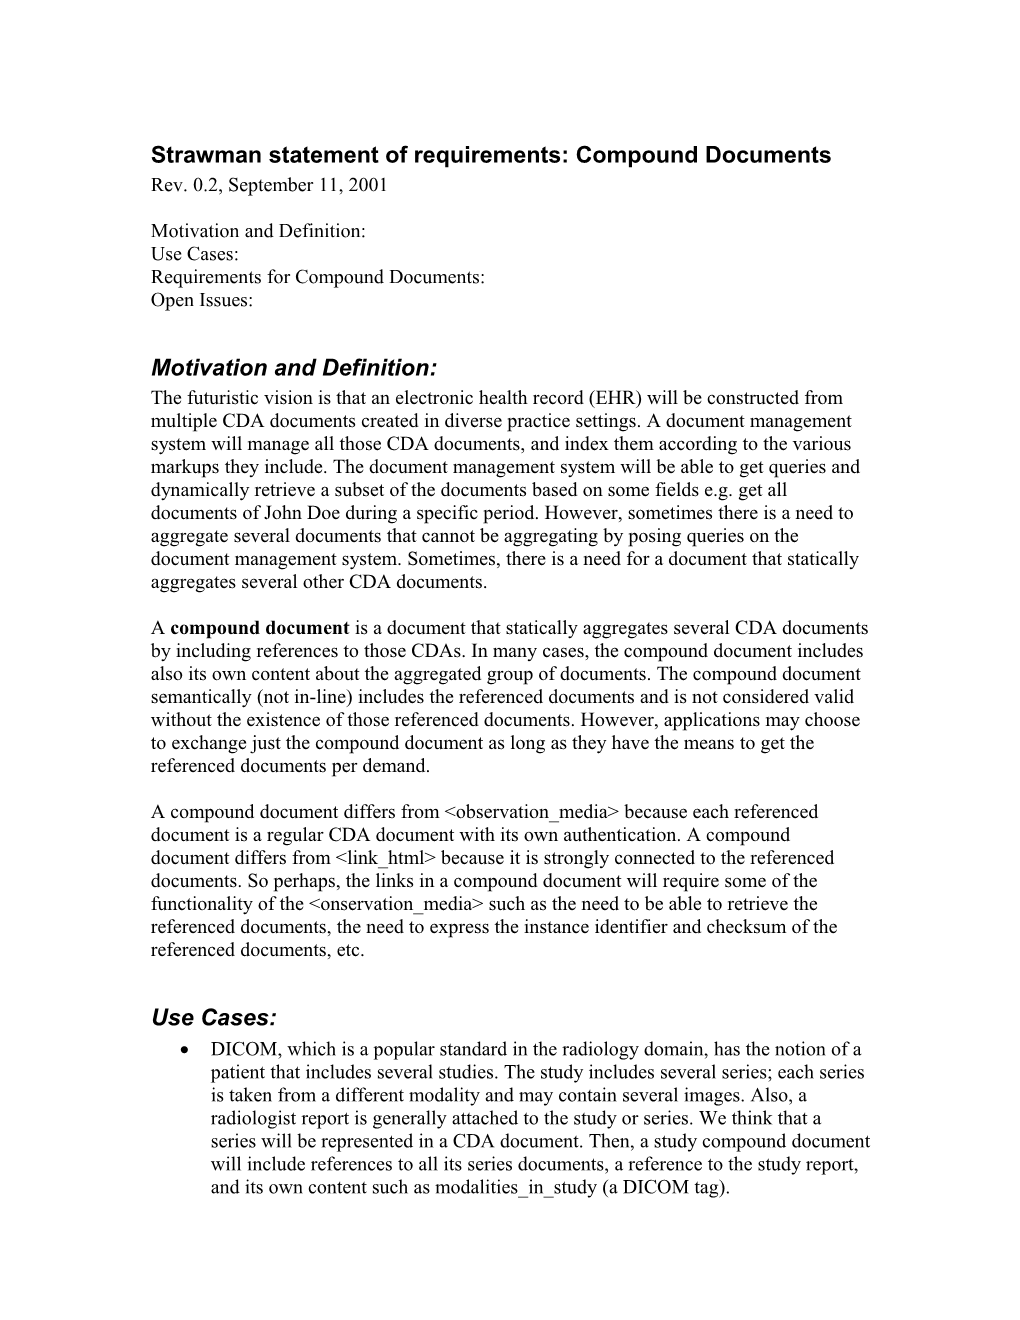 Strawman Statement of Requirements: Compound Documents